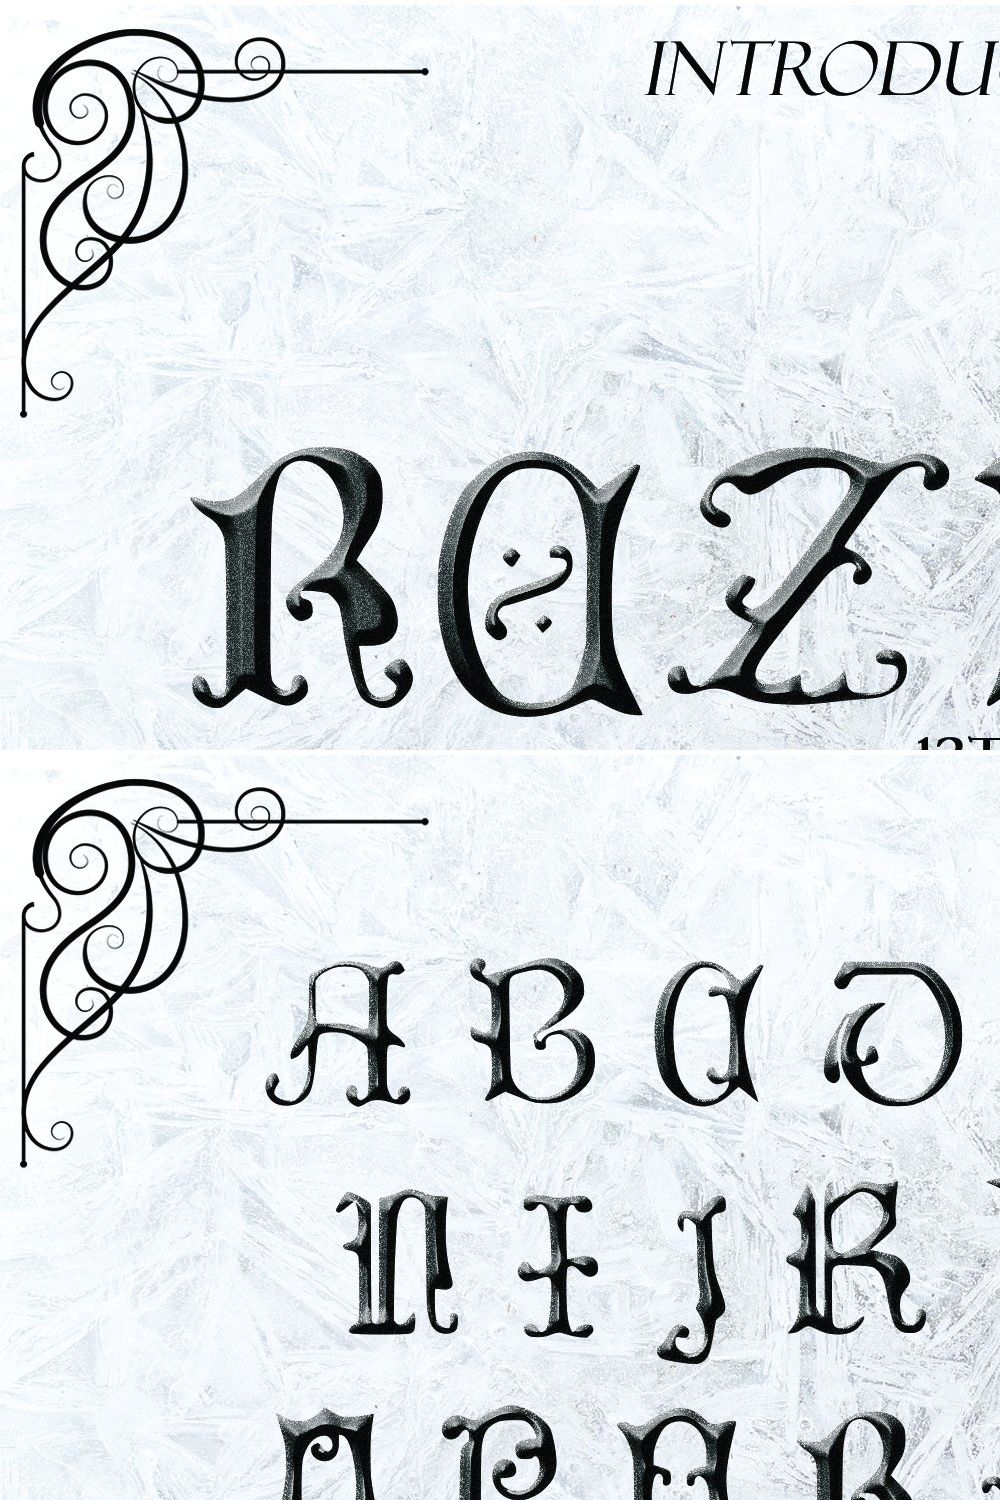 REZNOR, a Blackletter Typeface pinterest preview image.